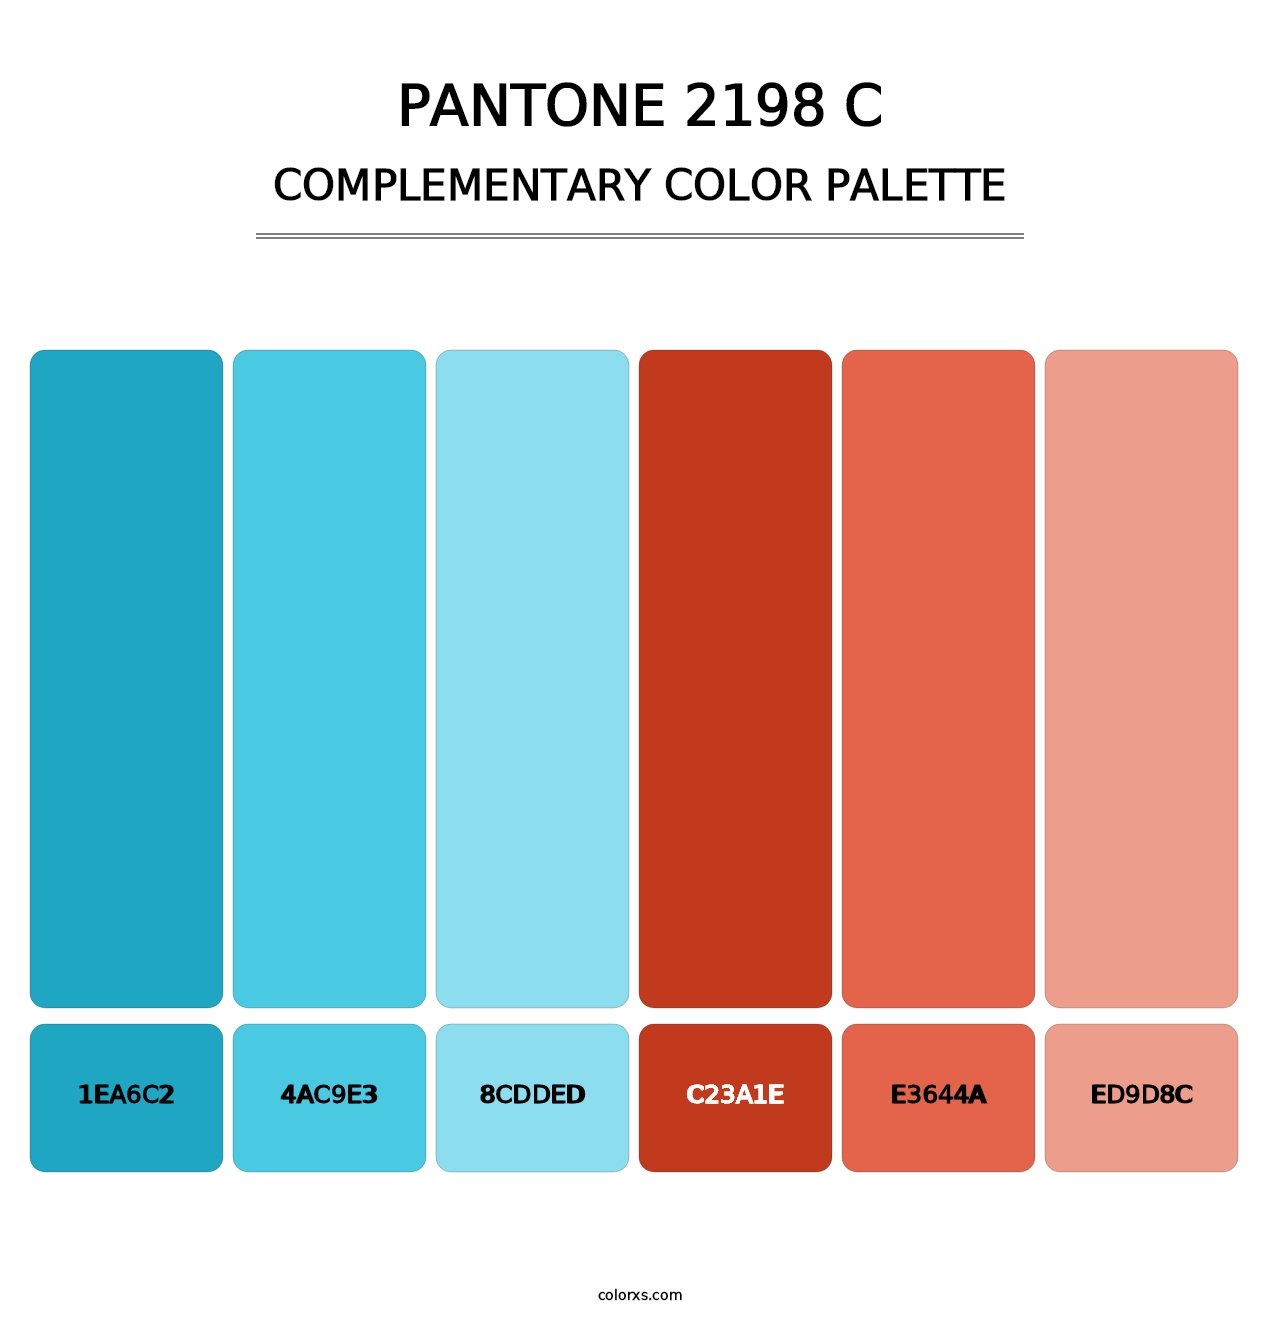 PANTONE 2198 C - Complementary Color Palette